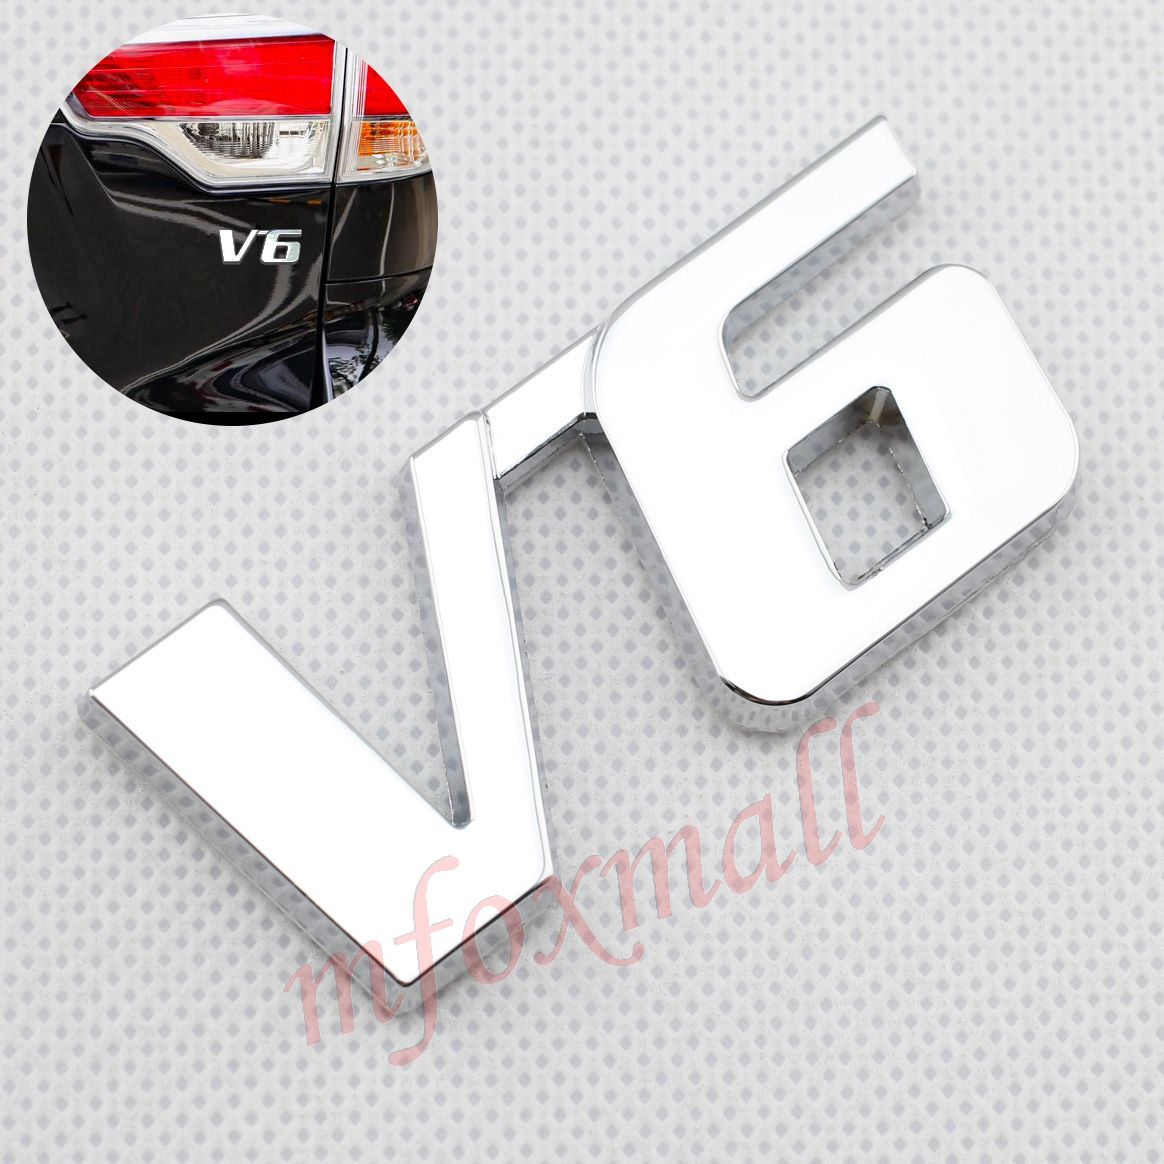 Black V6 LIUYE 3D Metal Zinc Alloy V6 Badge V6 Engine Sign,Car tail labeling automobile Styling Decorative Accessories